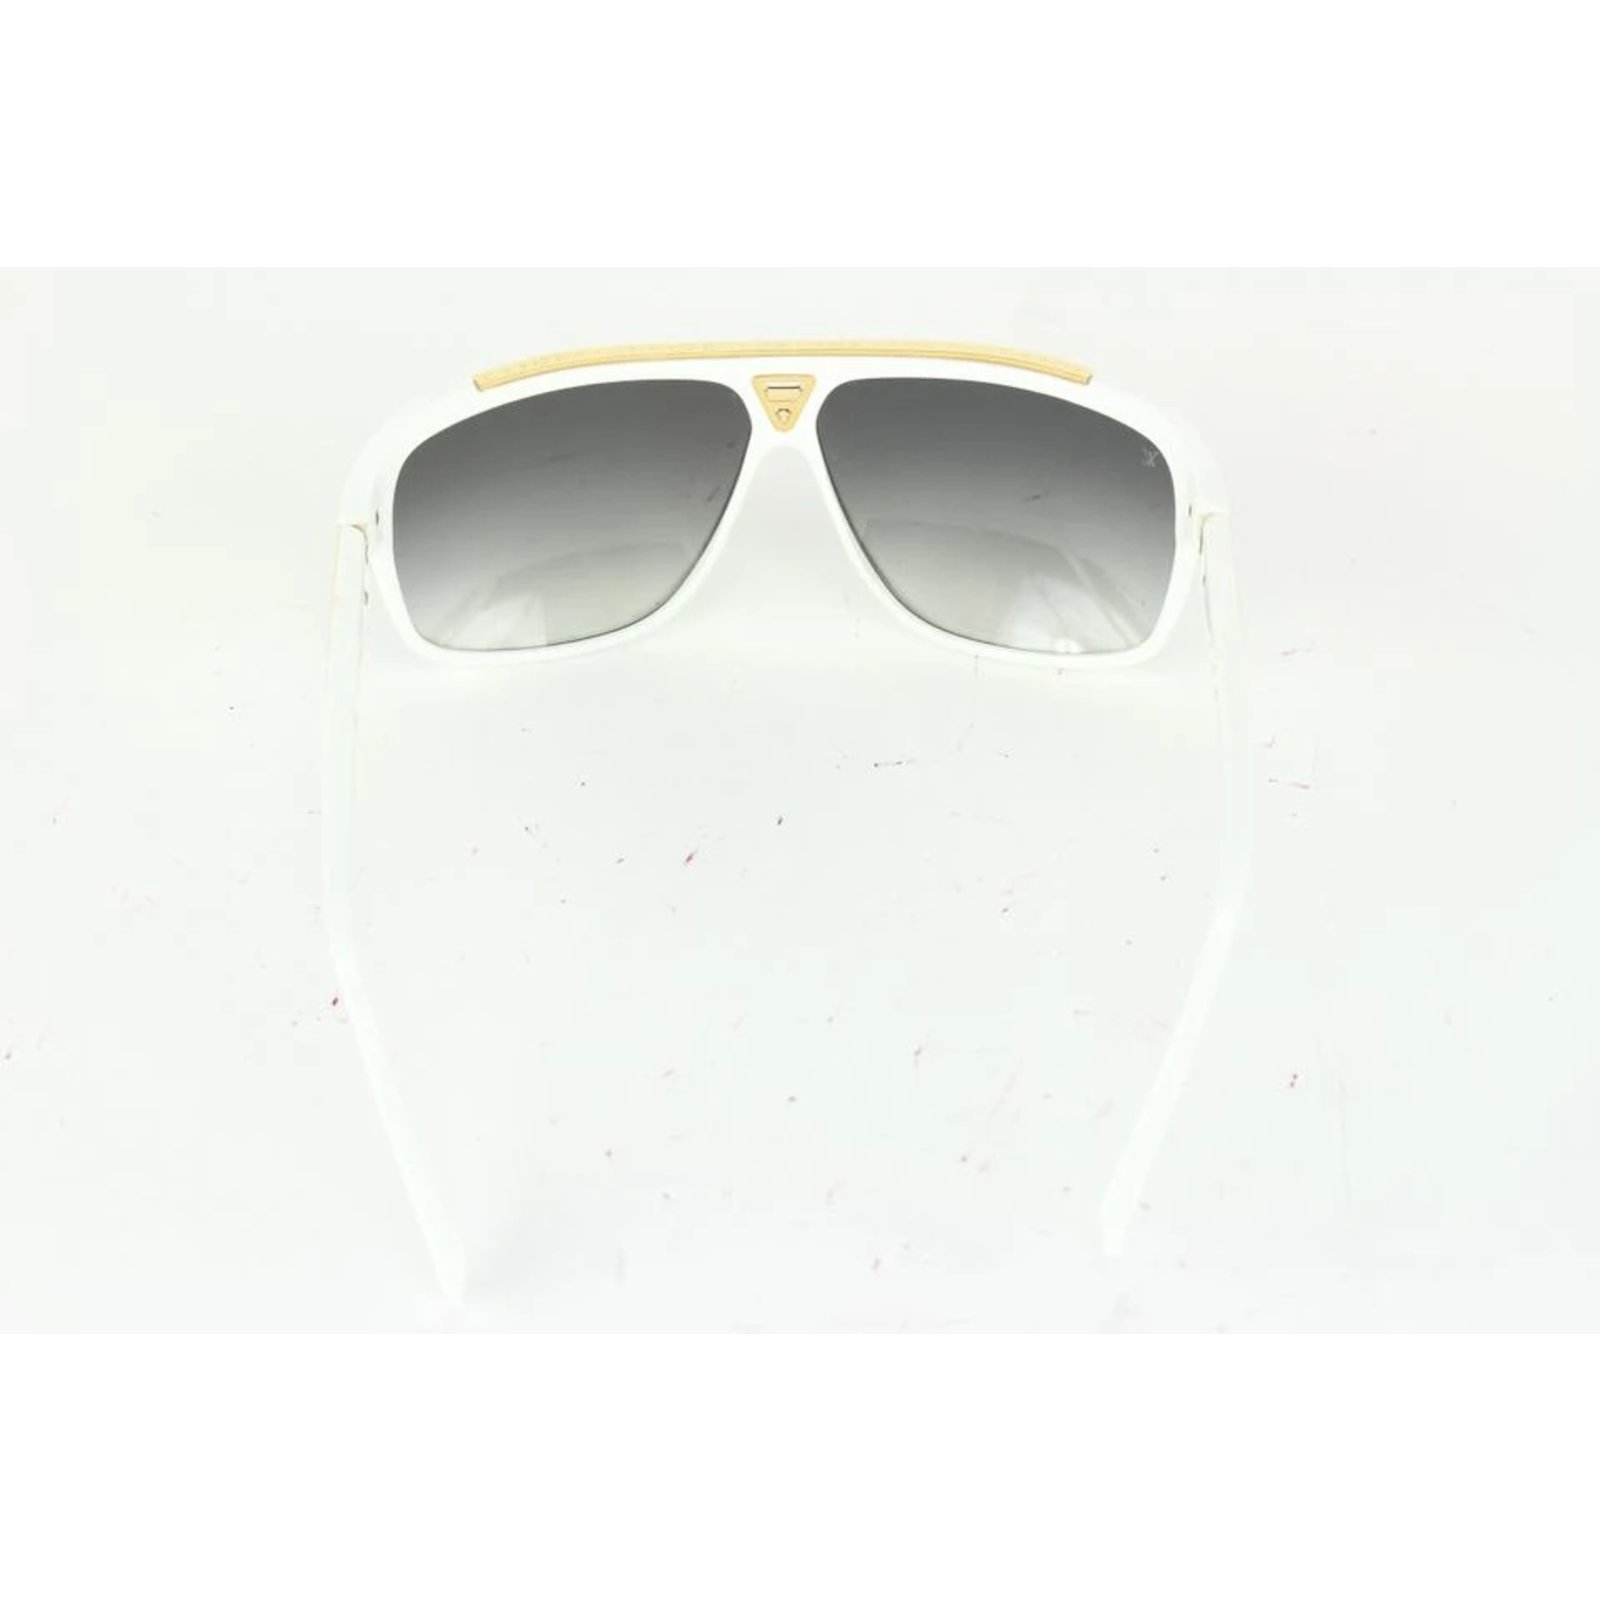 LOUIS VUITTON Evidence Sunglasses Z0351W White 217242